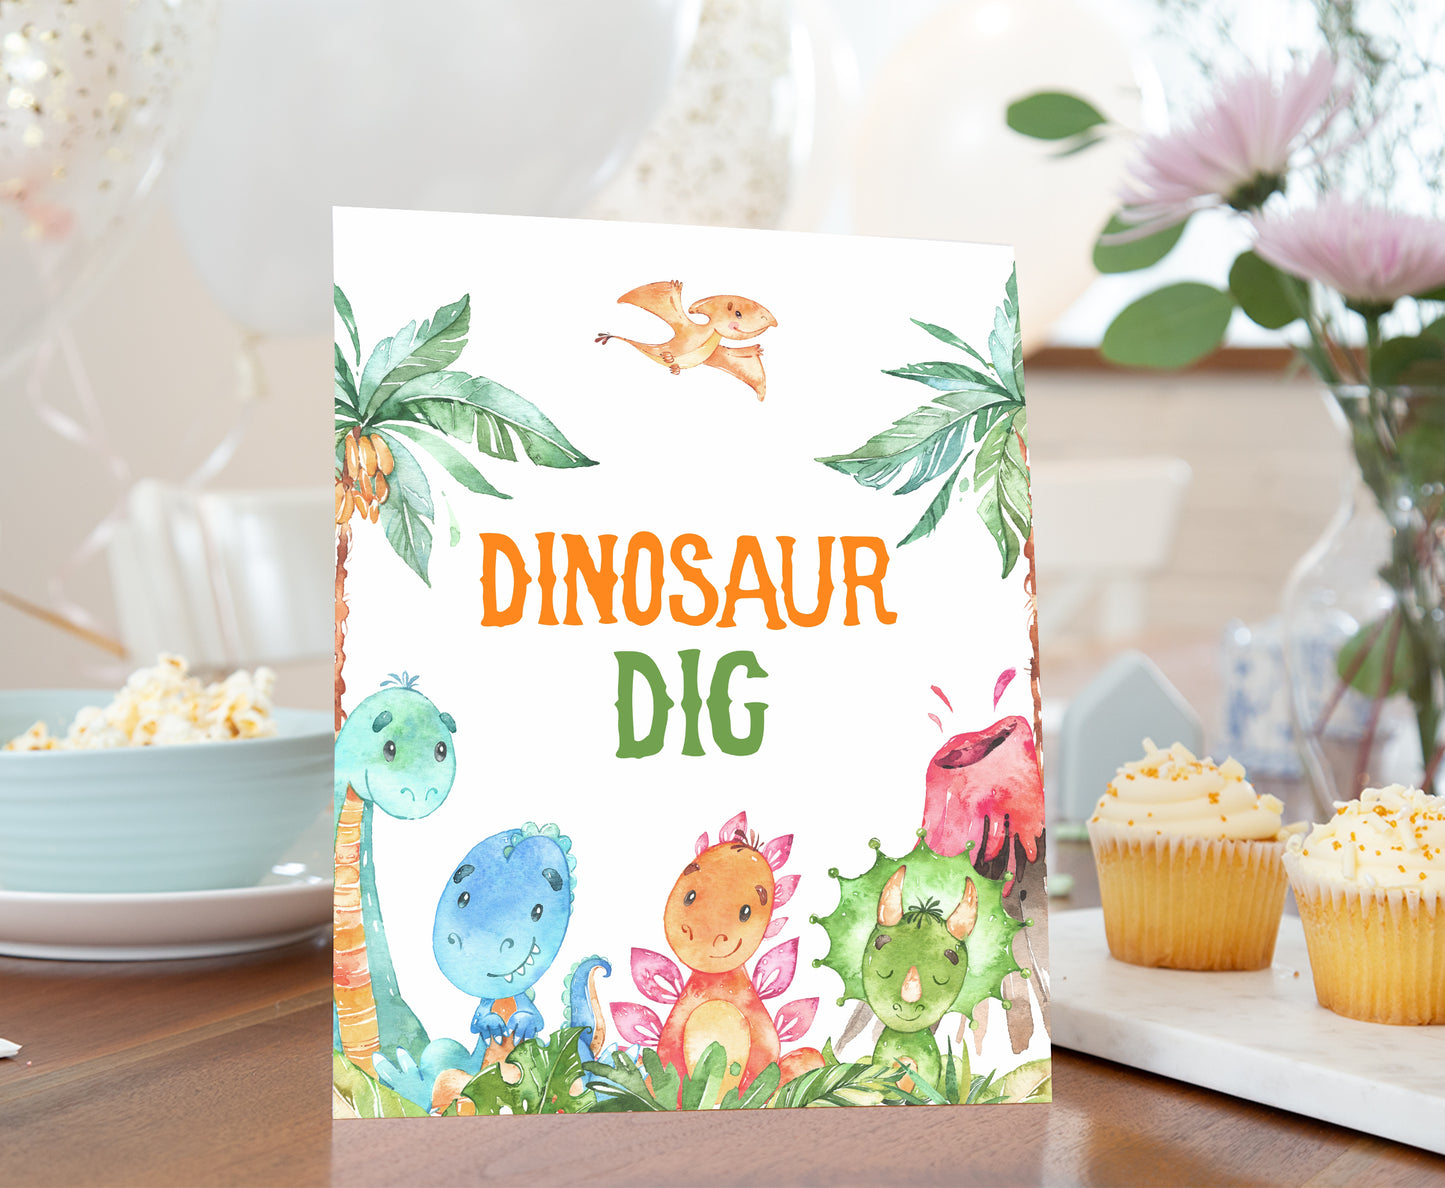 Dinosaur Dig Sign | Dinosaur Themed Party Table Decorations - 08A